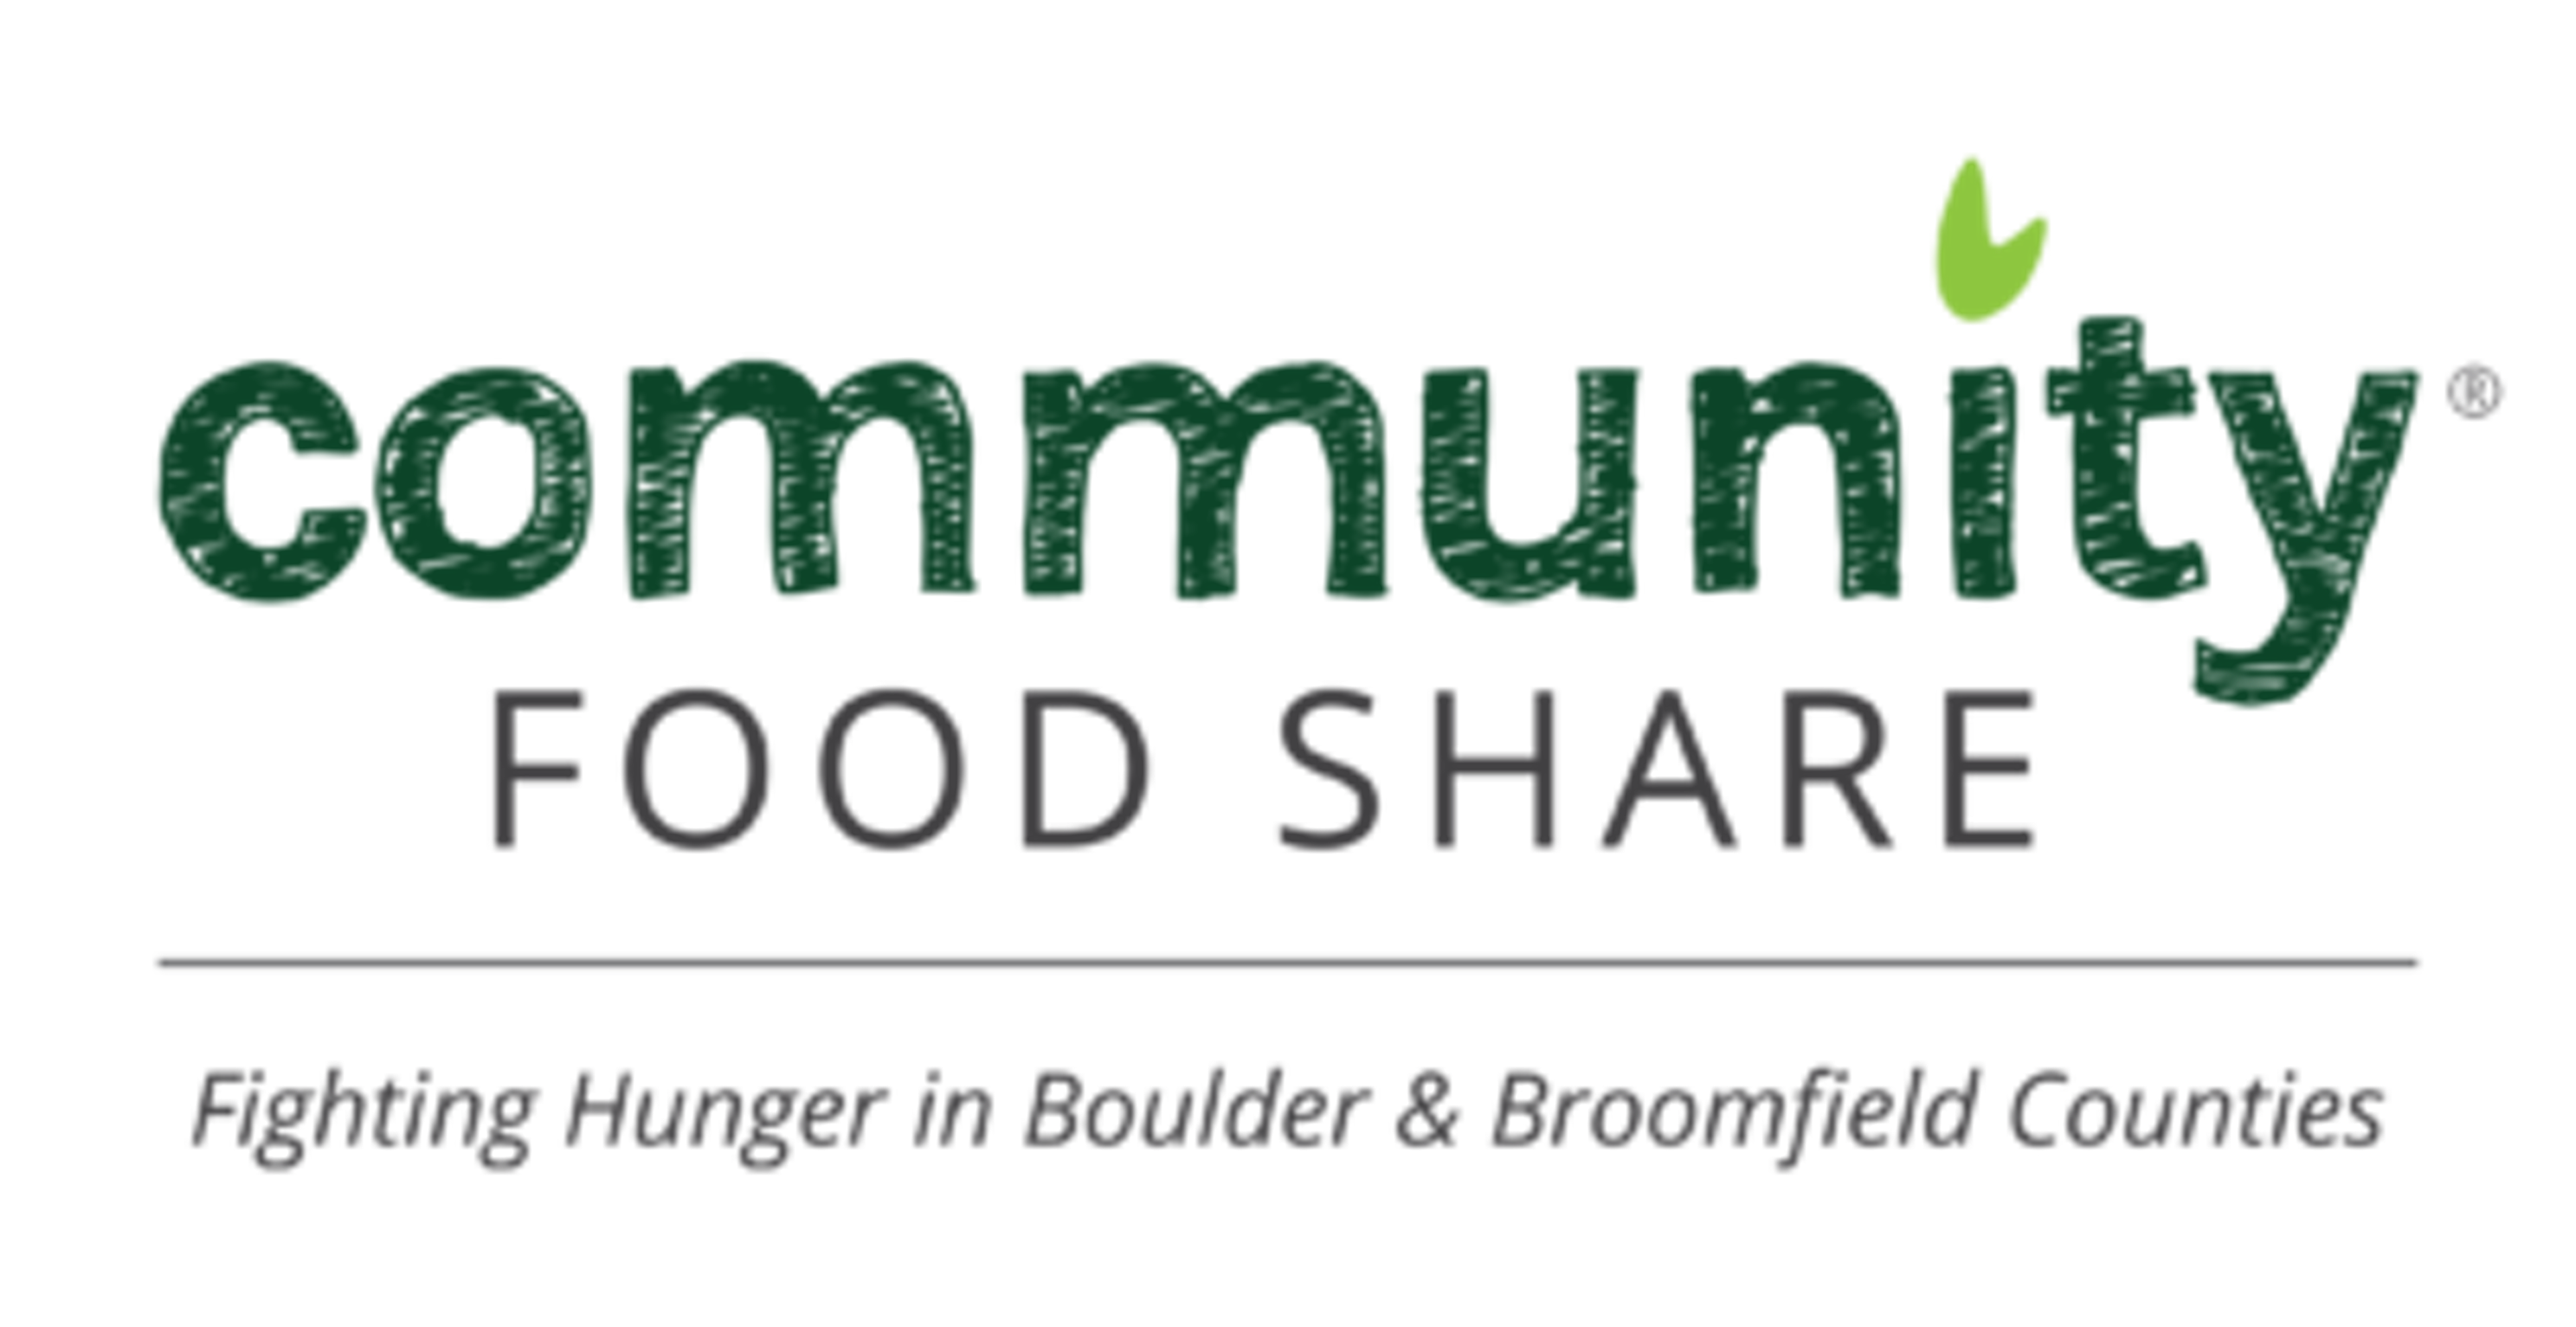 Community food share logo